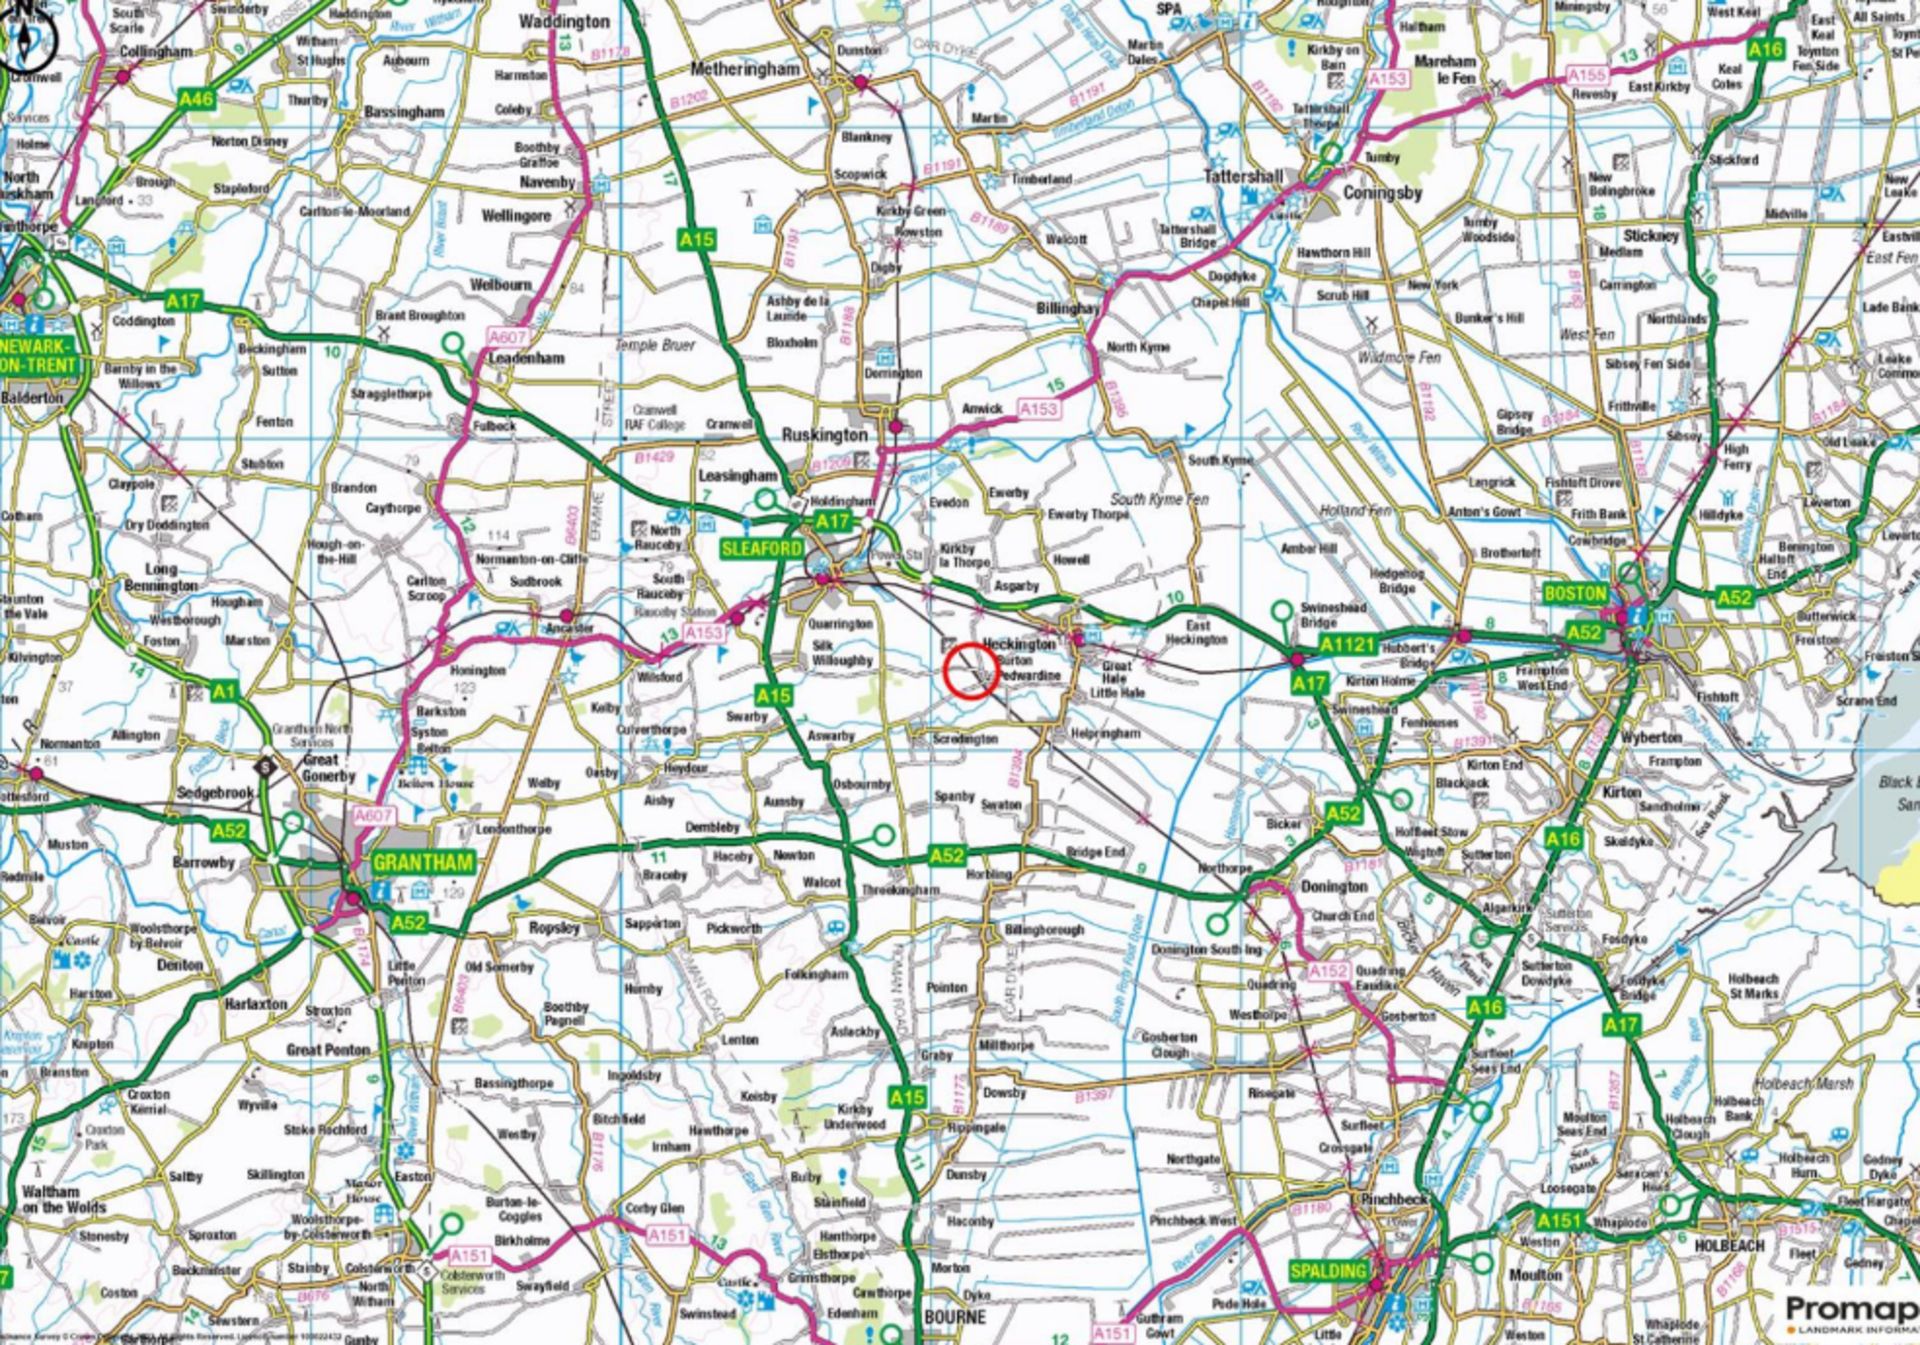 Brackenbury Fishery, White Cross Lane, Burton Pedwardine, Sleaford, Lincolnshire, NG34 0BZ - Image 2 of 16